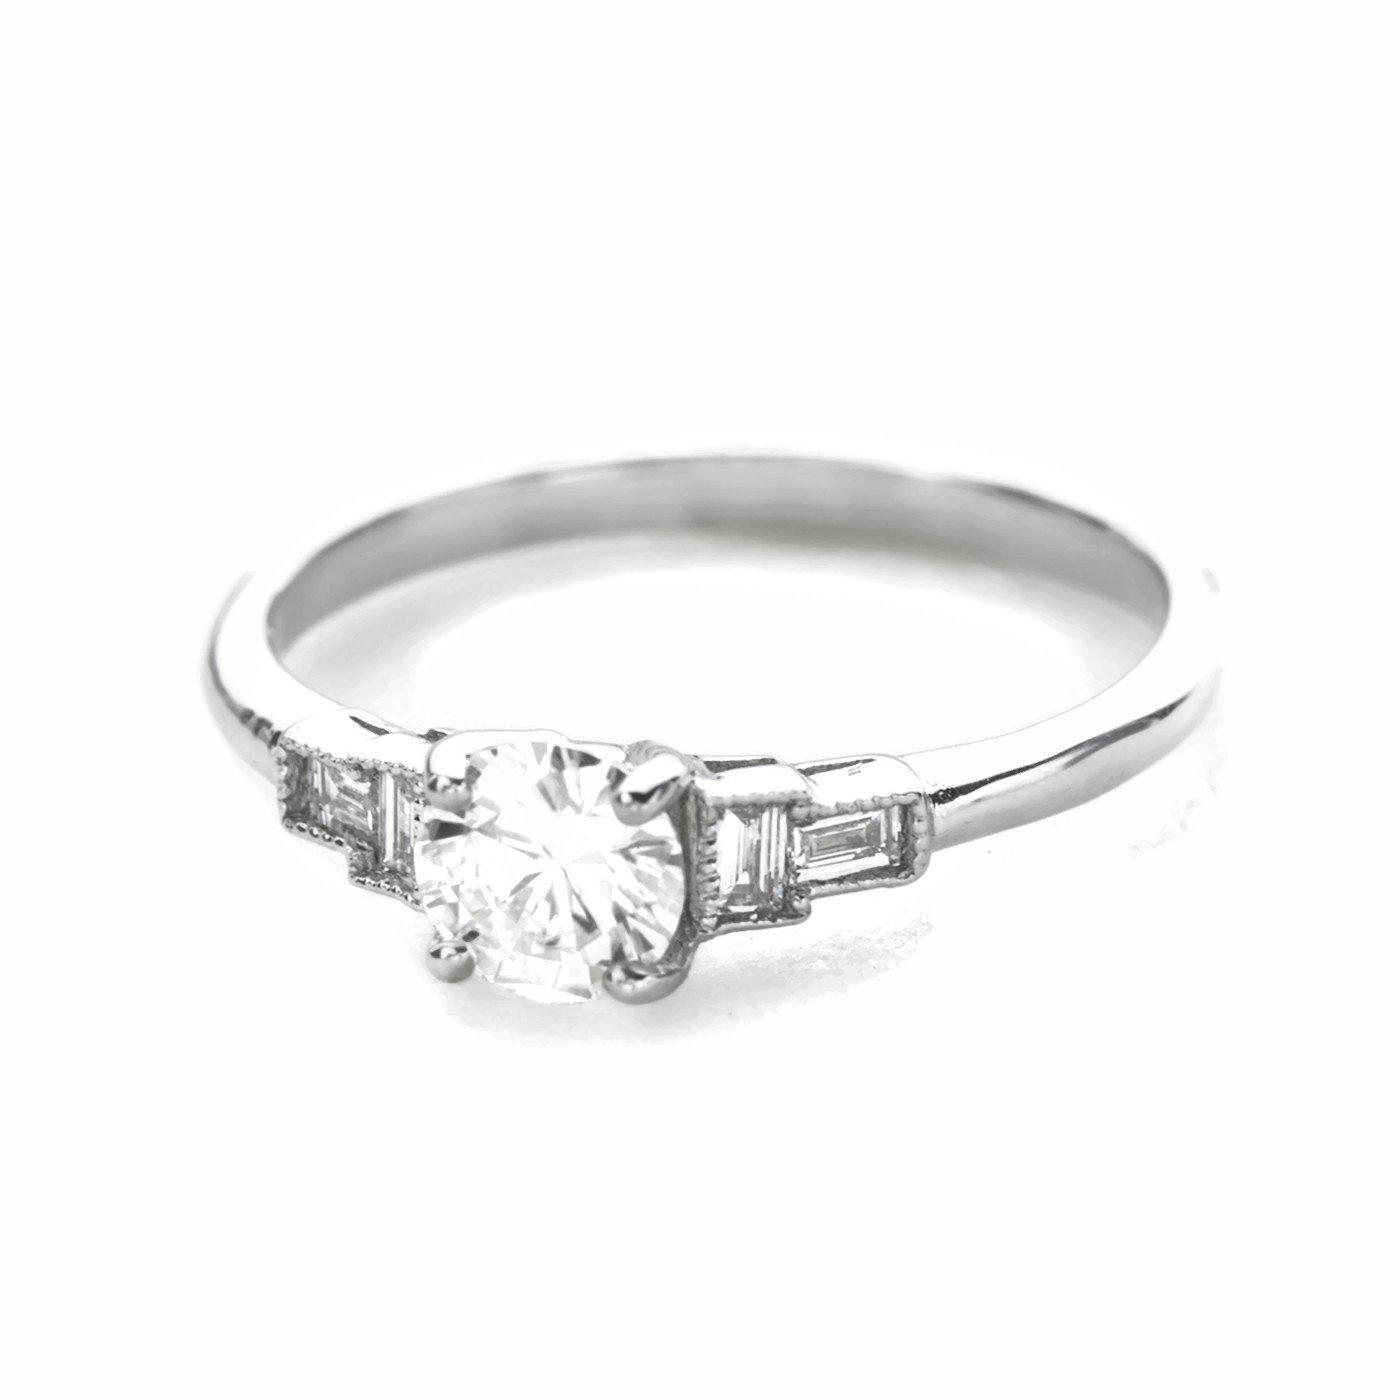 Marlow Art Deco Diamond Ring